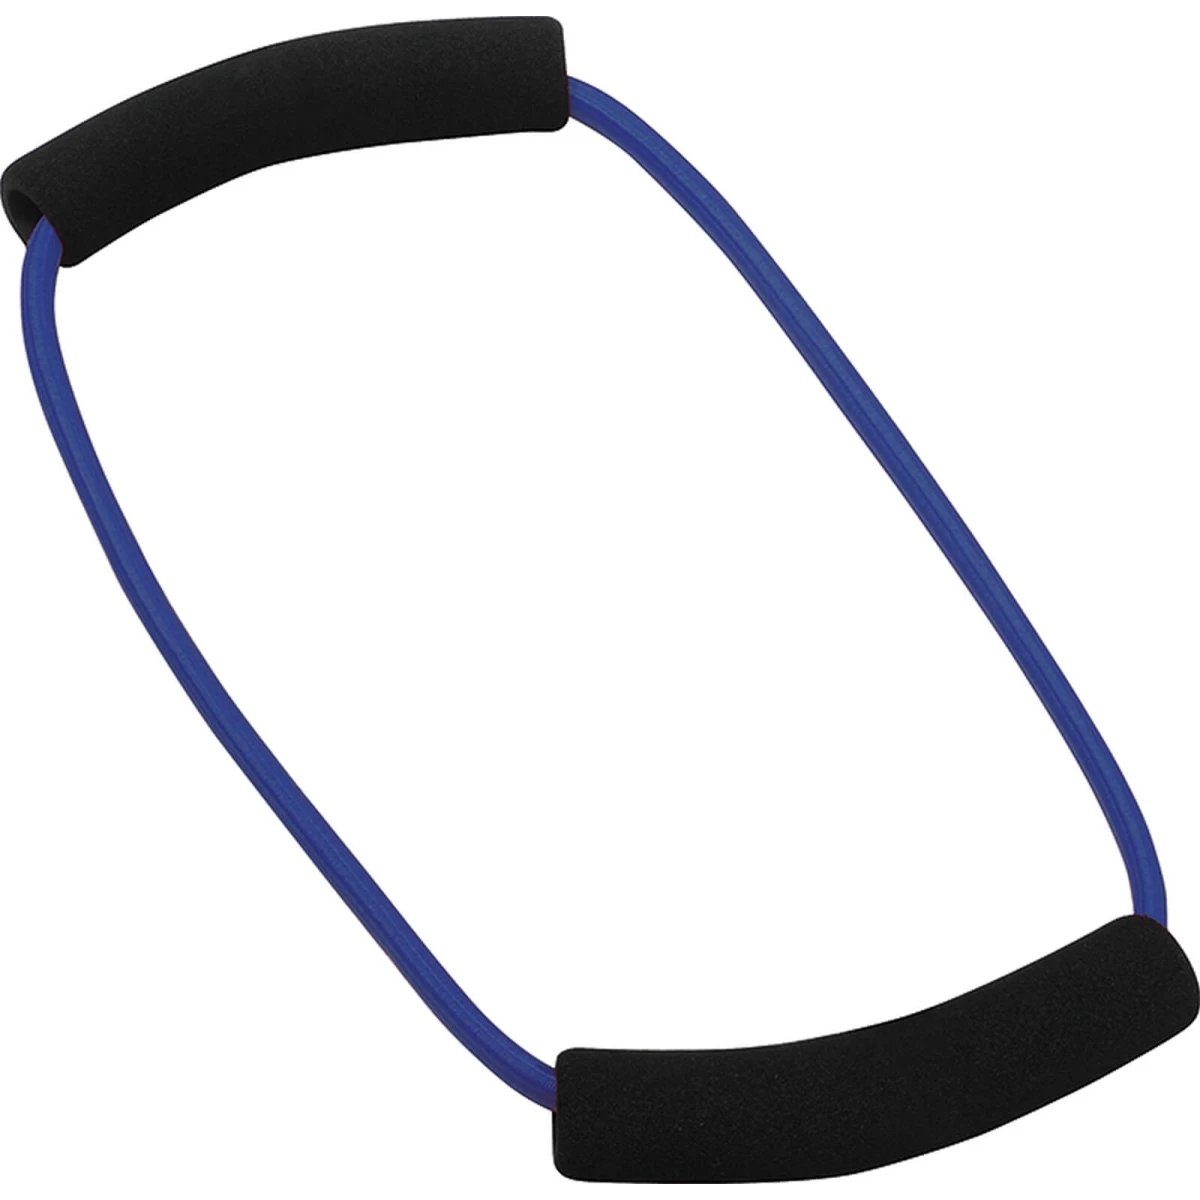 Deuser-Sports Trainingsband Ring Fitnessband Gymnastikband Gummiband Sport, Work-Out-Trainingsband Tube - MITTEL blau